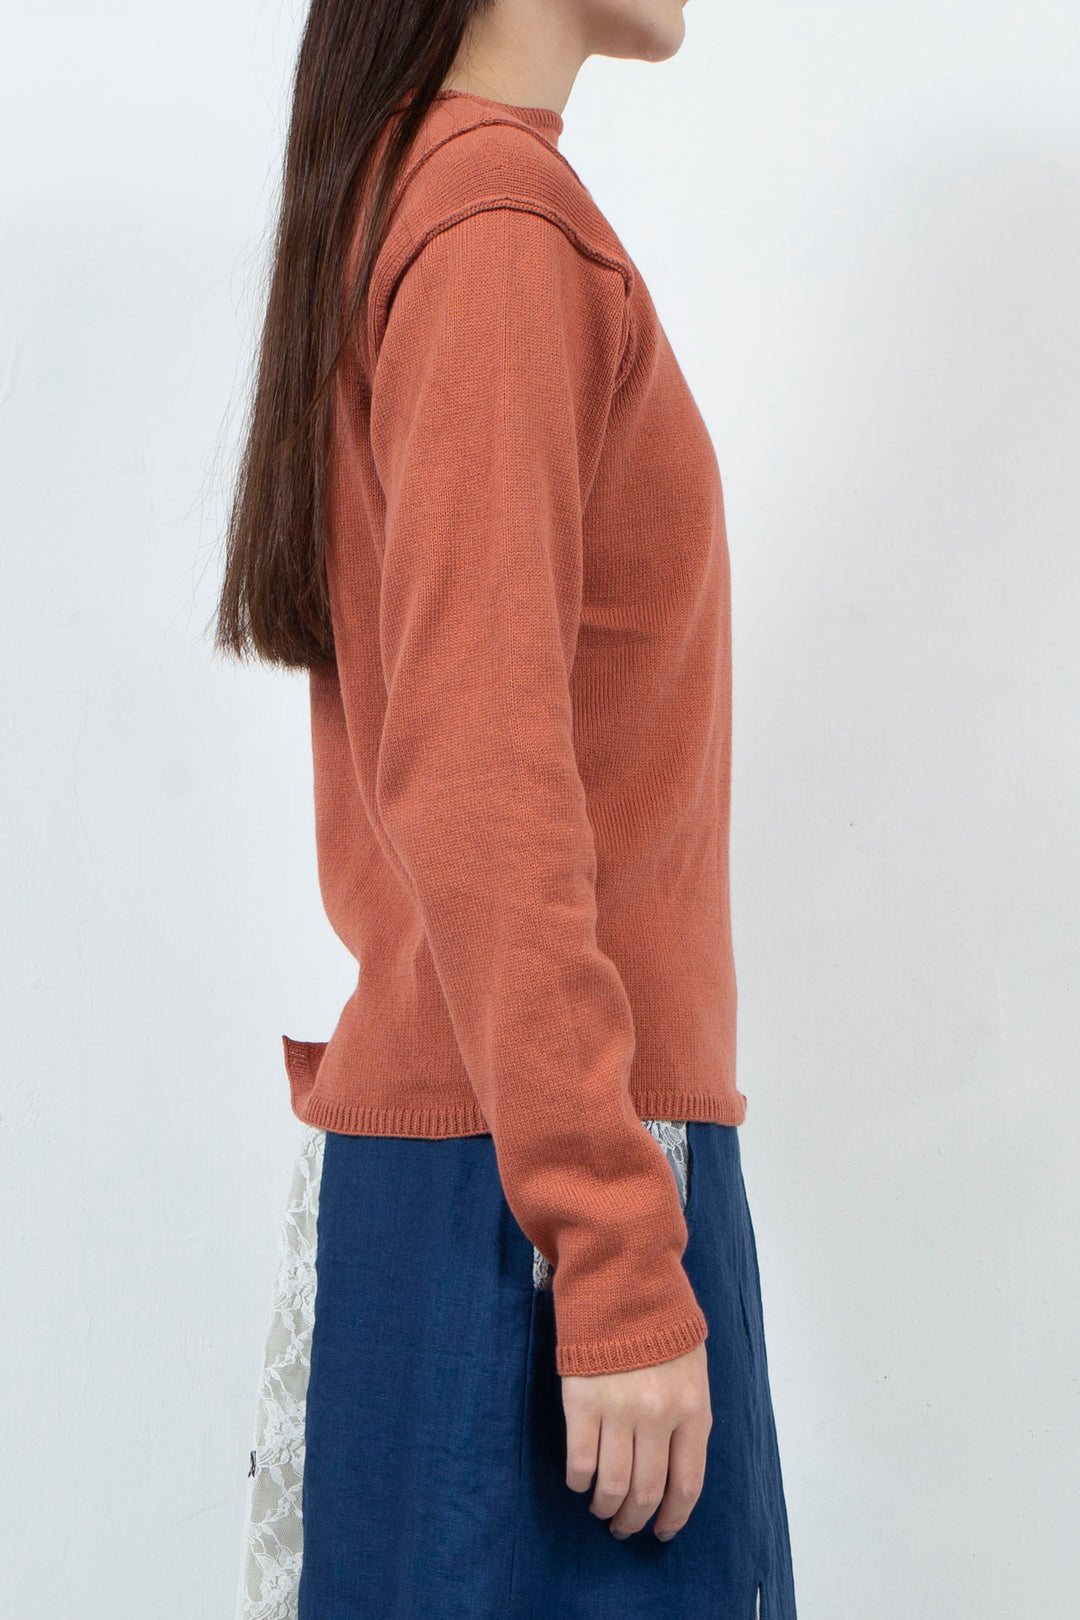 OBAKE FACE knit tops ~Orange~